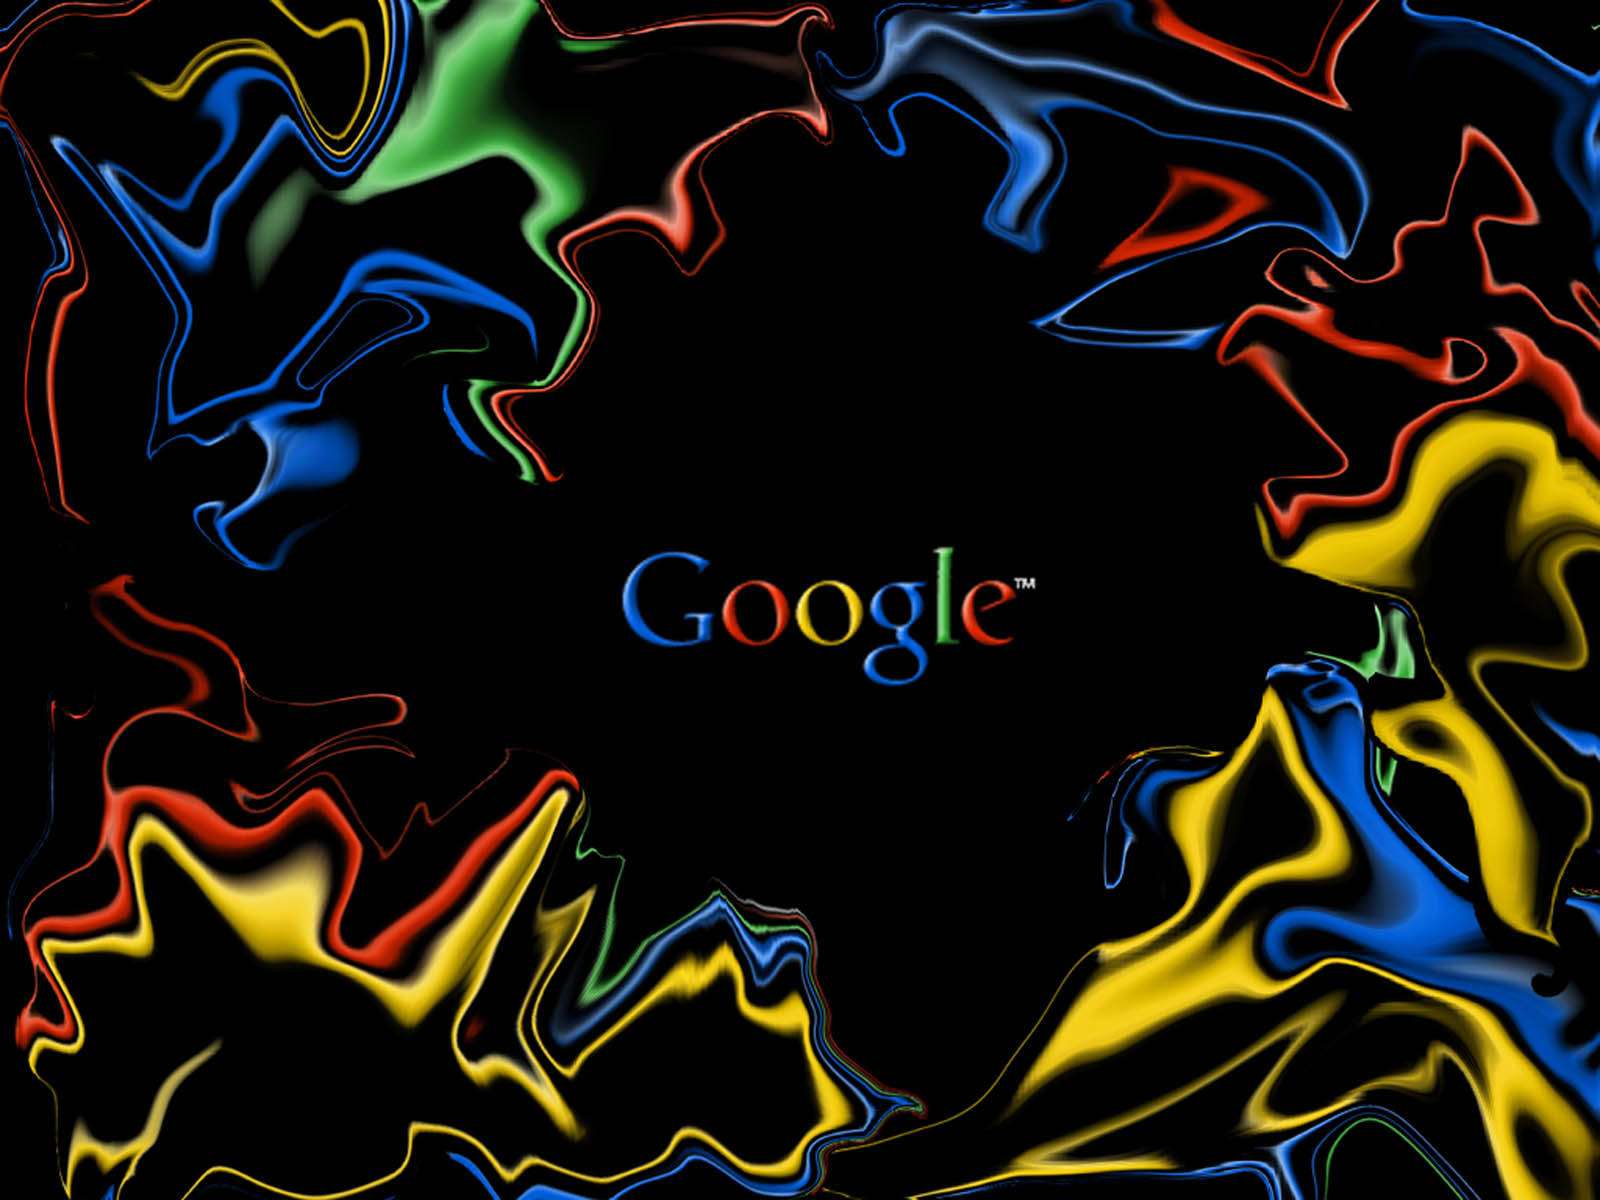 Google Colorful Waves Wallpaper